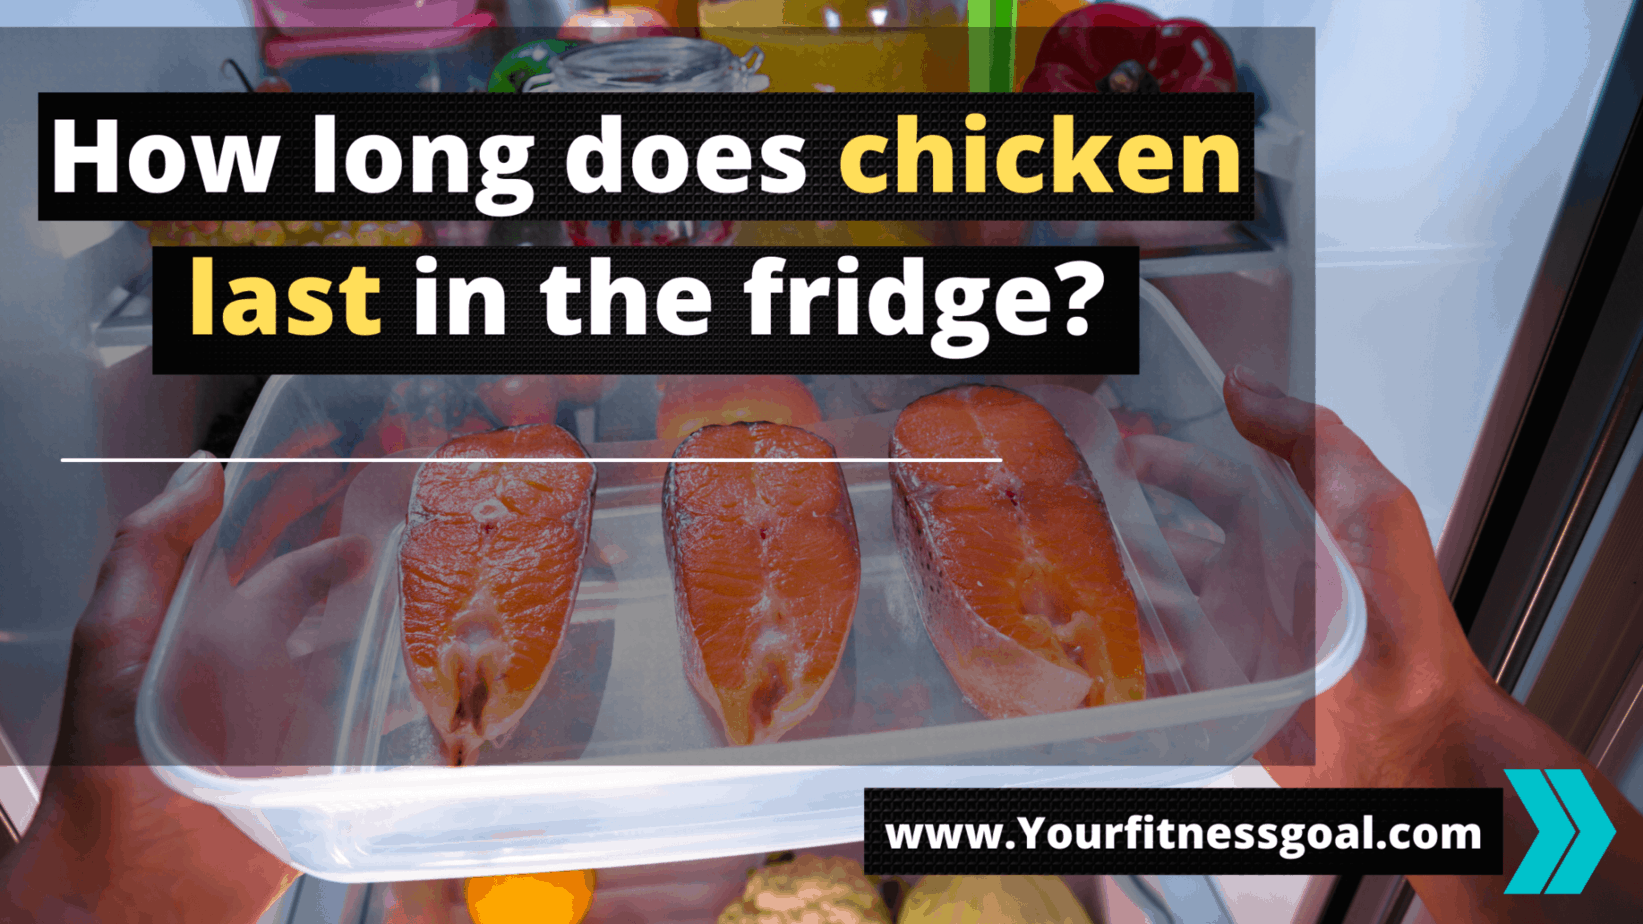 How long does chicken last in the fridge? - Yourfitnessgoal